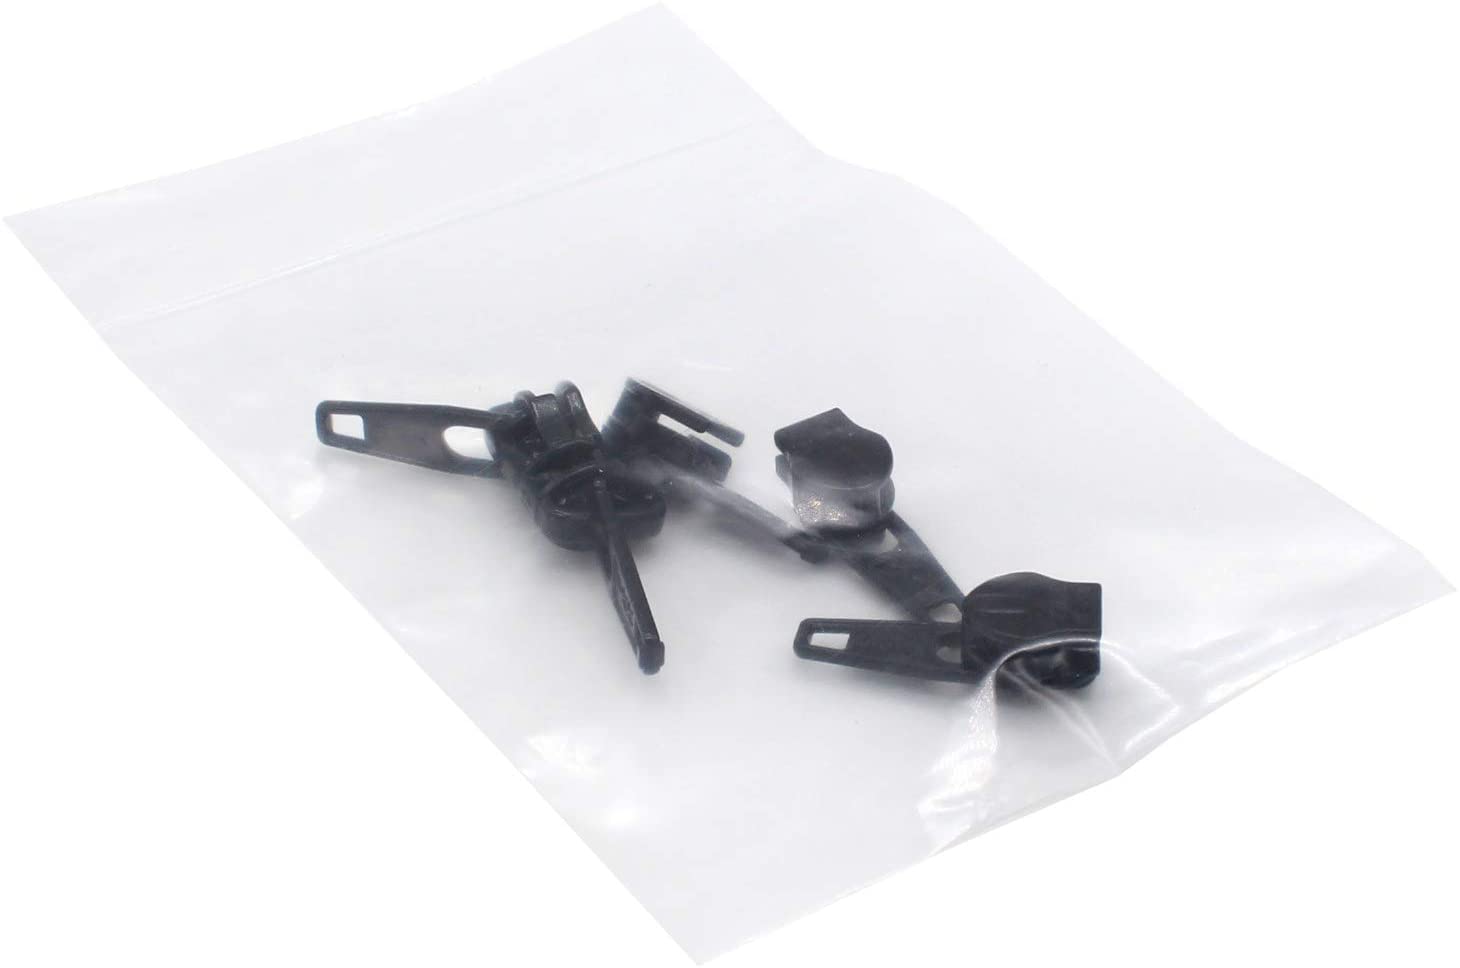 YKK Zipper Repair Kit #5 Slider (DA8LH) Automatic Lock Pull Jacket Pouch  Slider